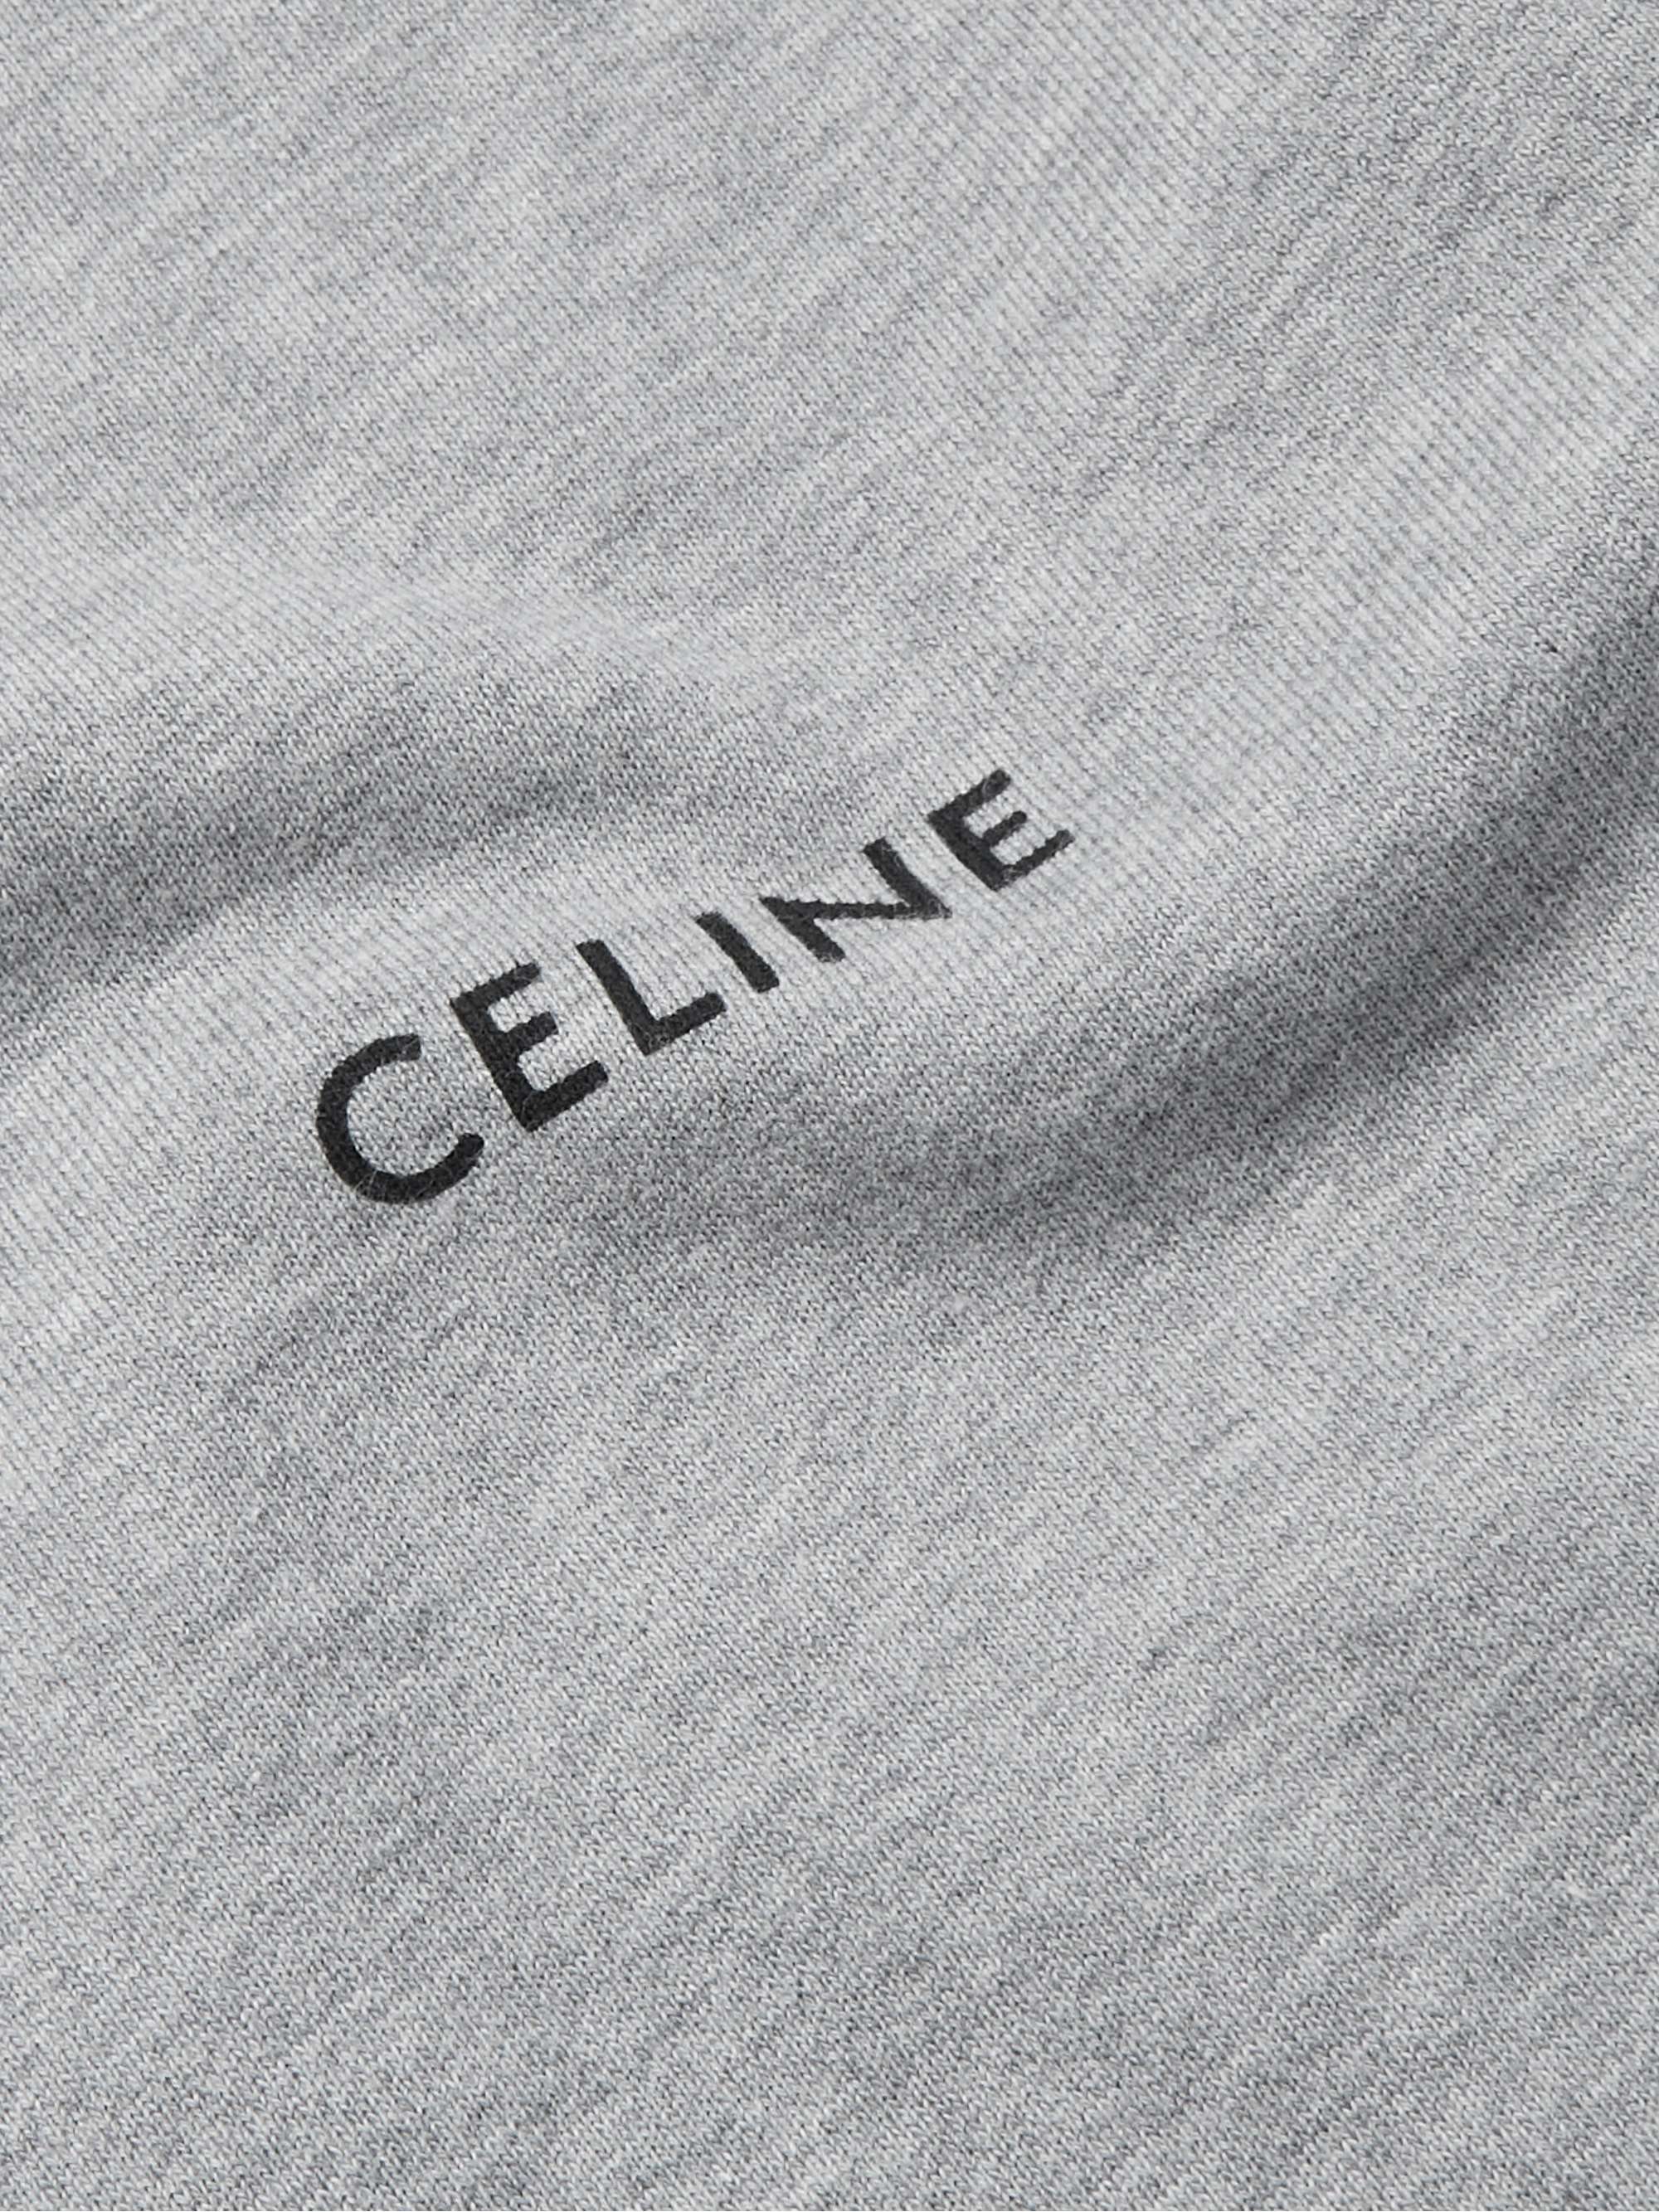 CELINE HOMME Logo-Print Stretch-Cotton Jersey Sweatshirt